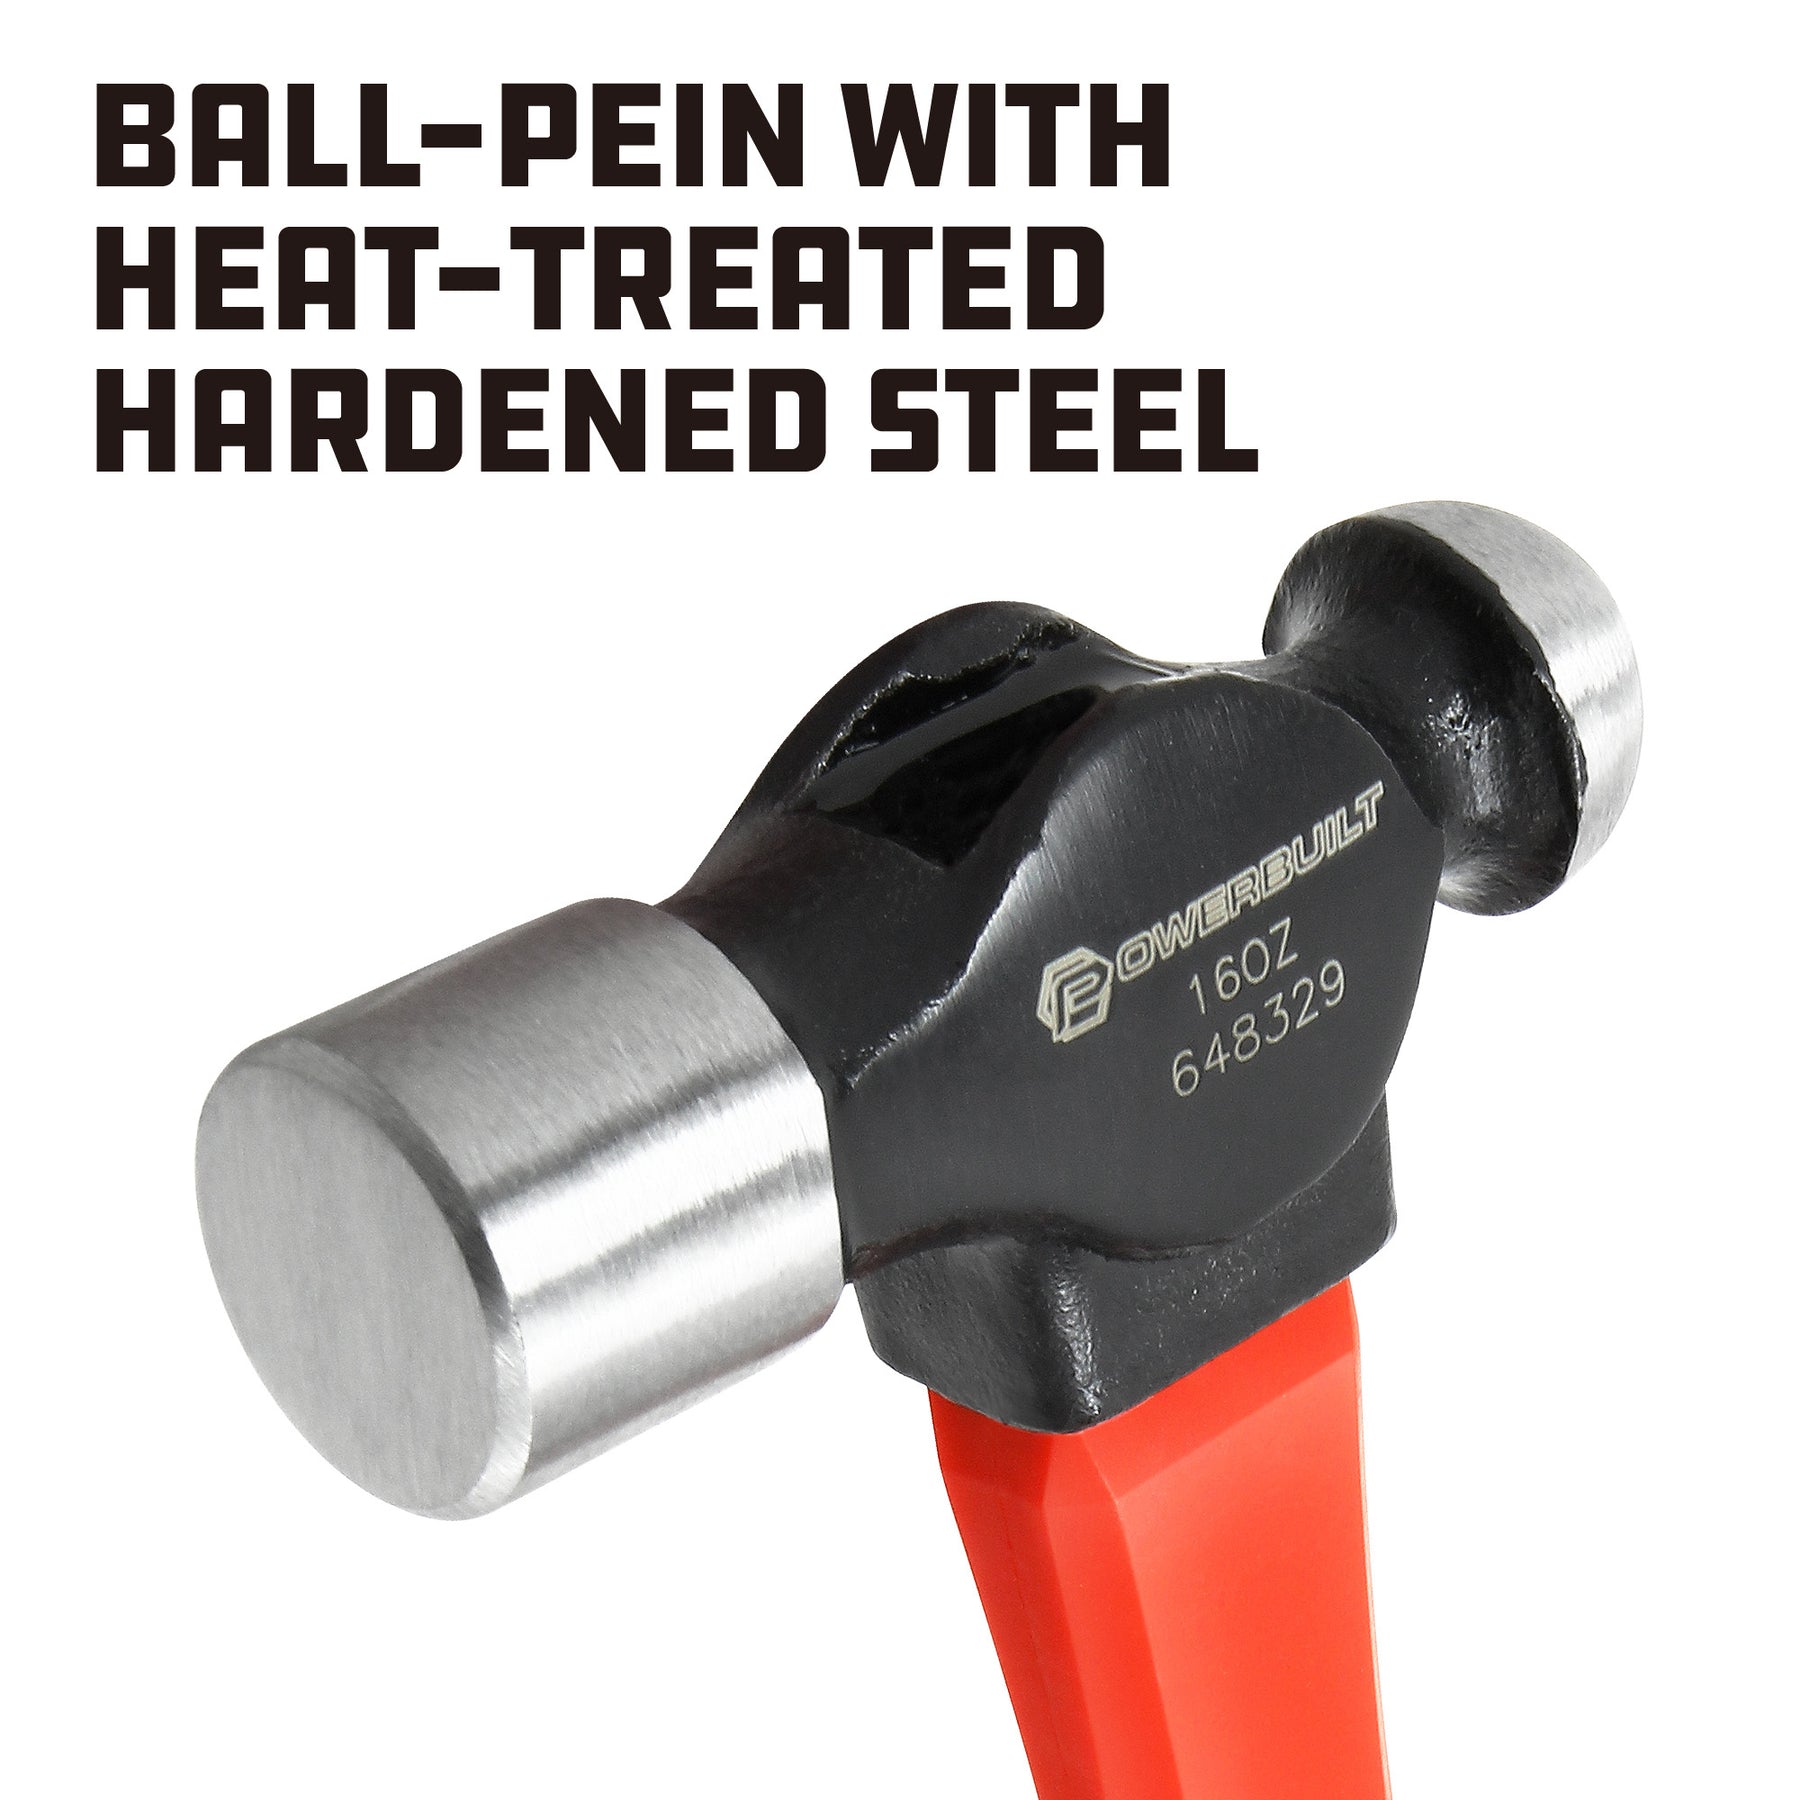 #10200 - 16oz(453g) Stainless Steel Ball Pein Hammer.